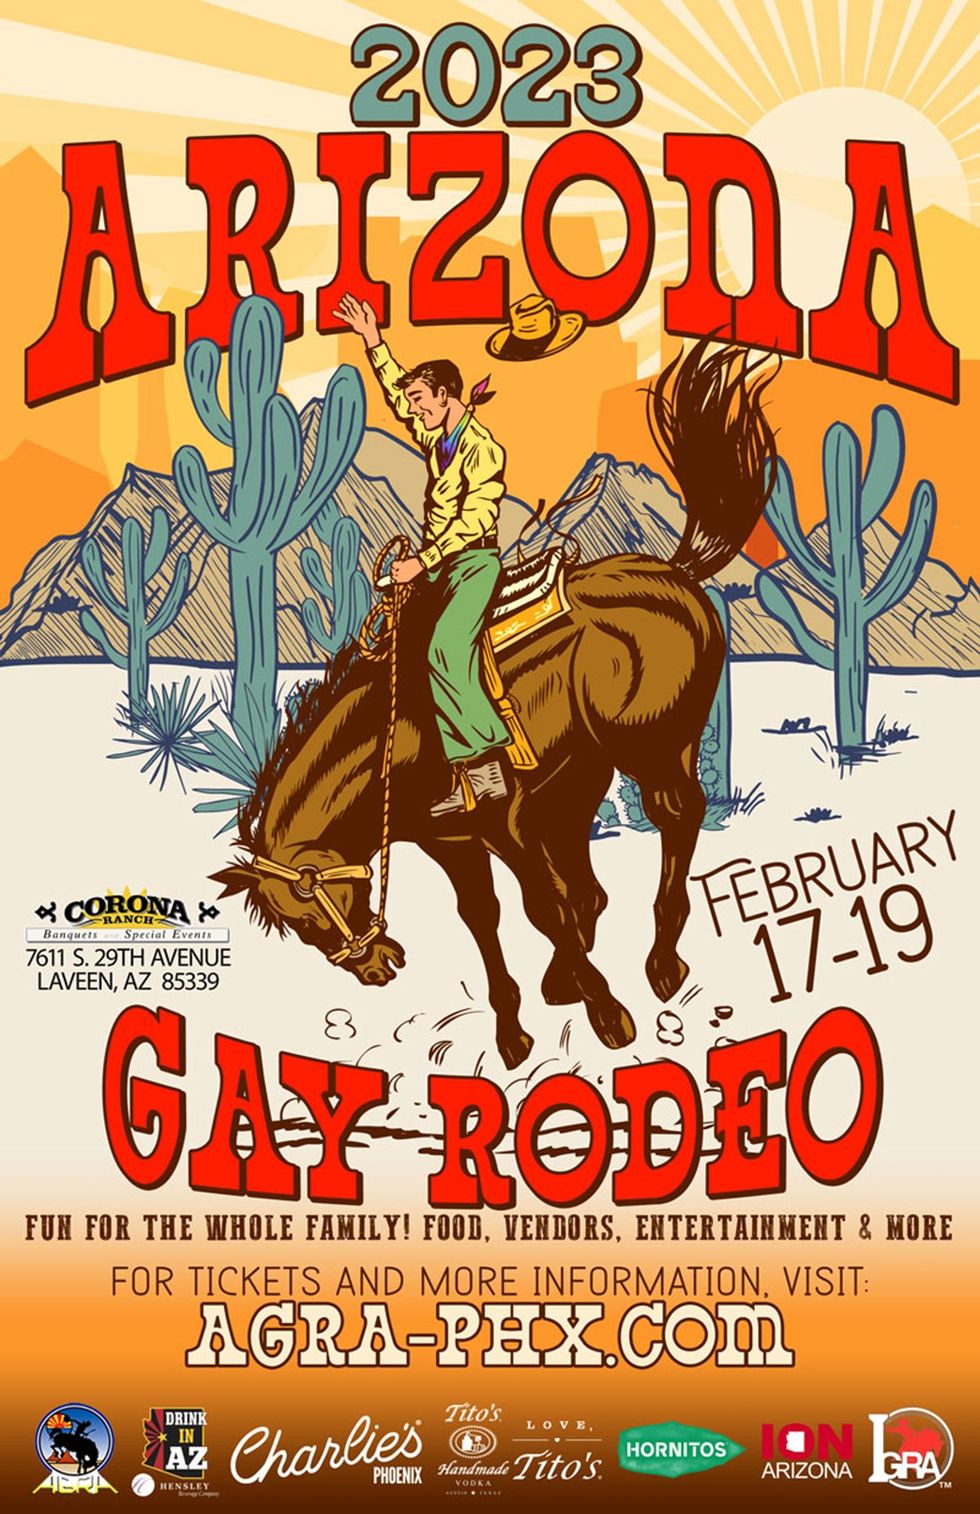 37th annual Arizona Gay Rodeo